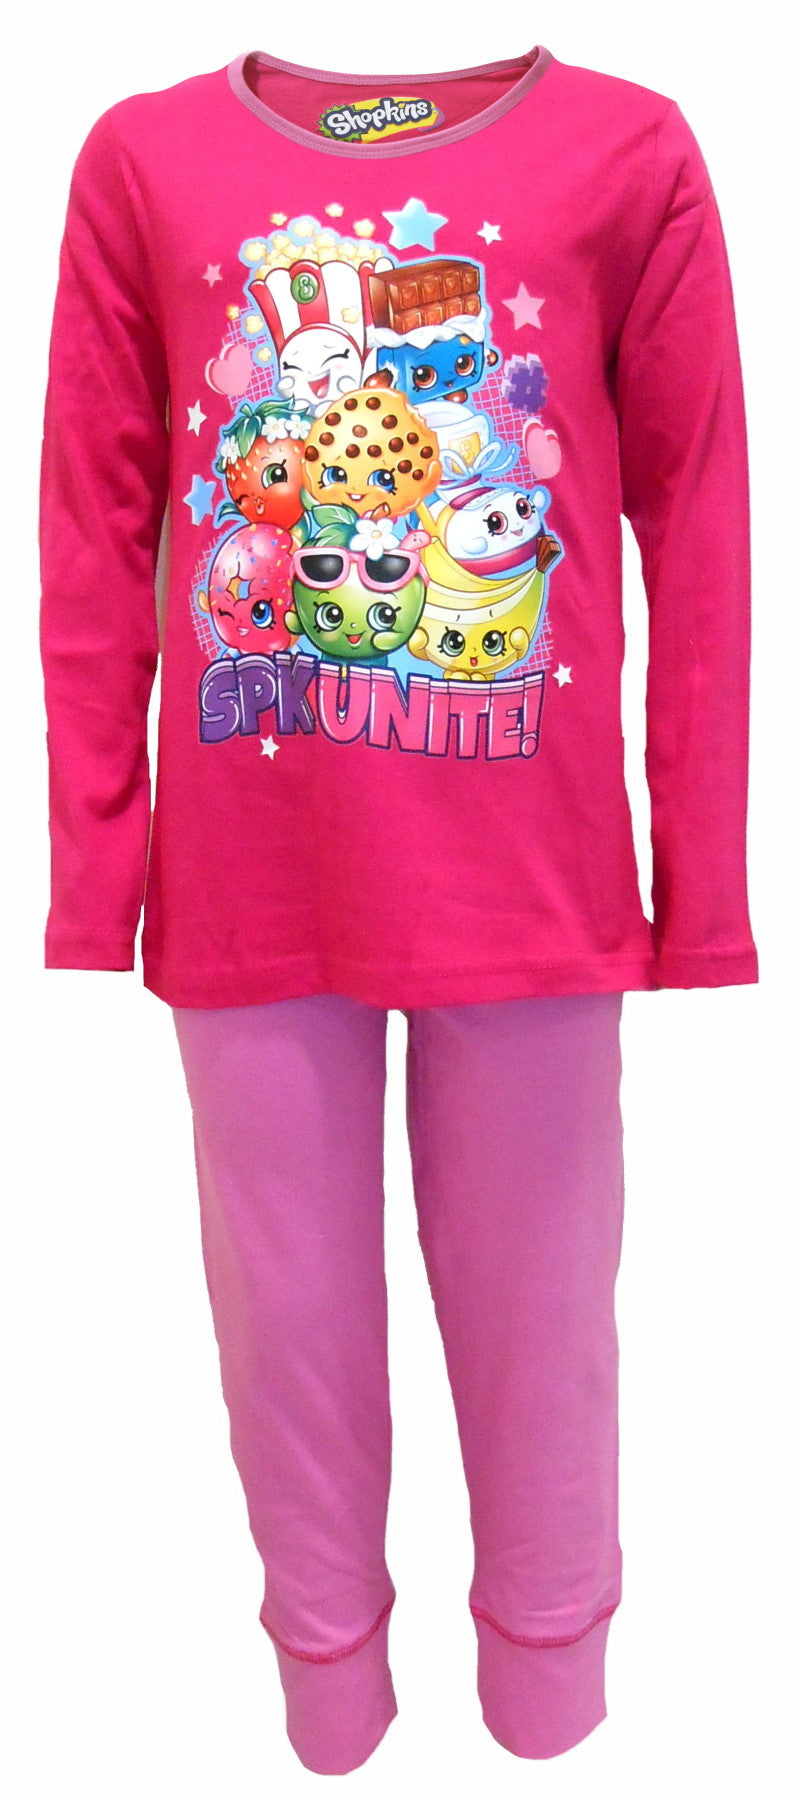 Shopkins "SPK Unite!" Girls Cotton Pyjamas